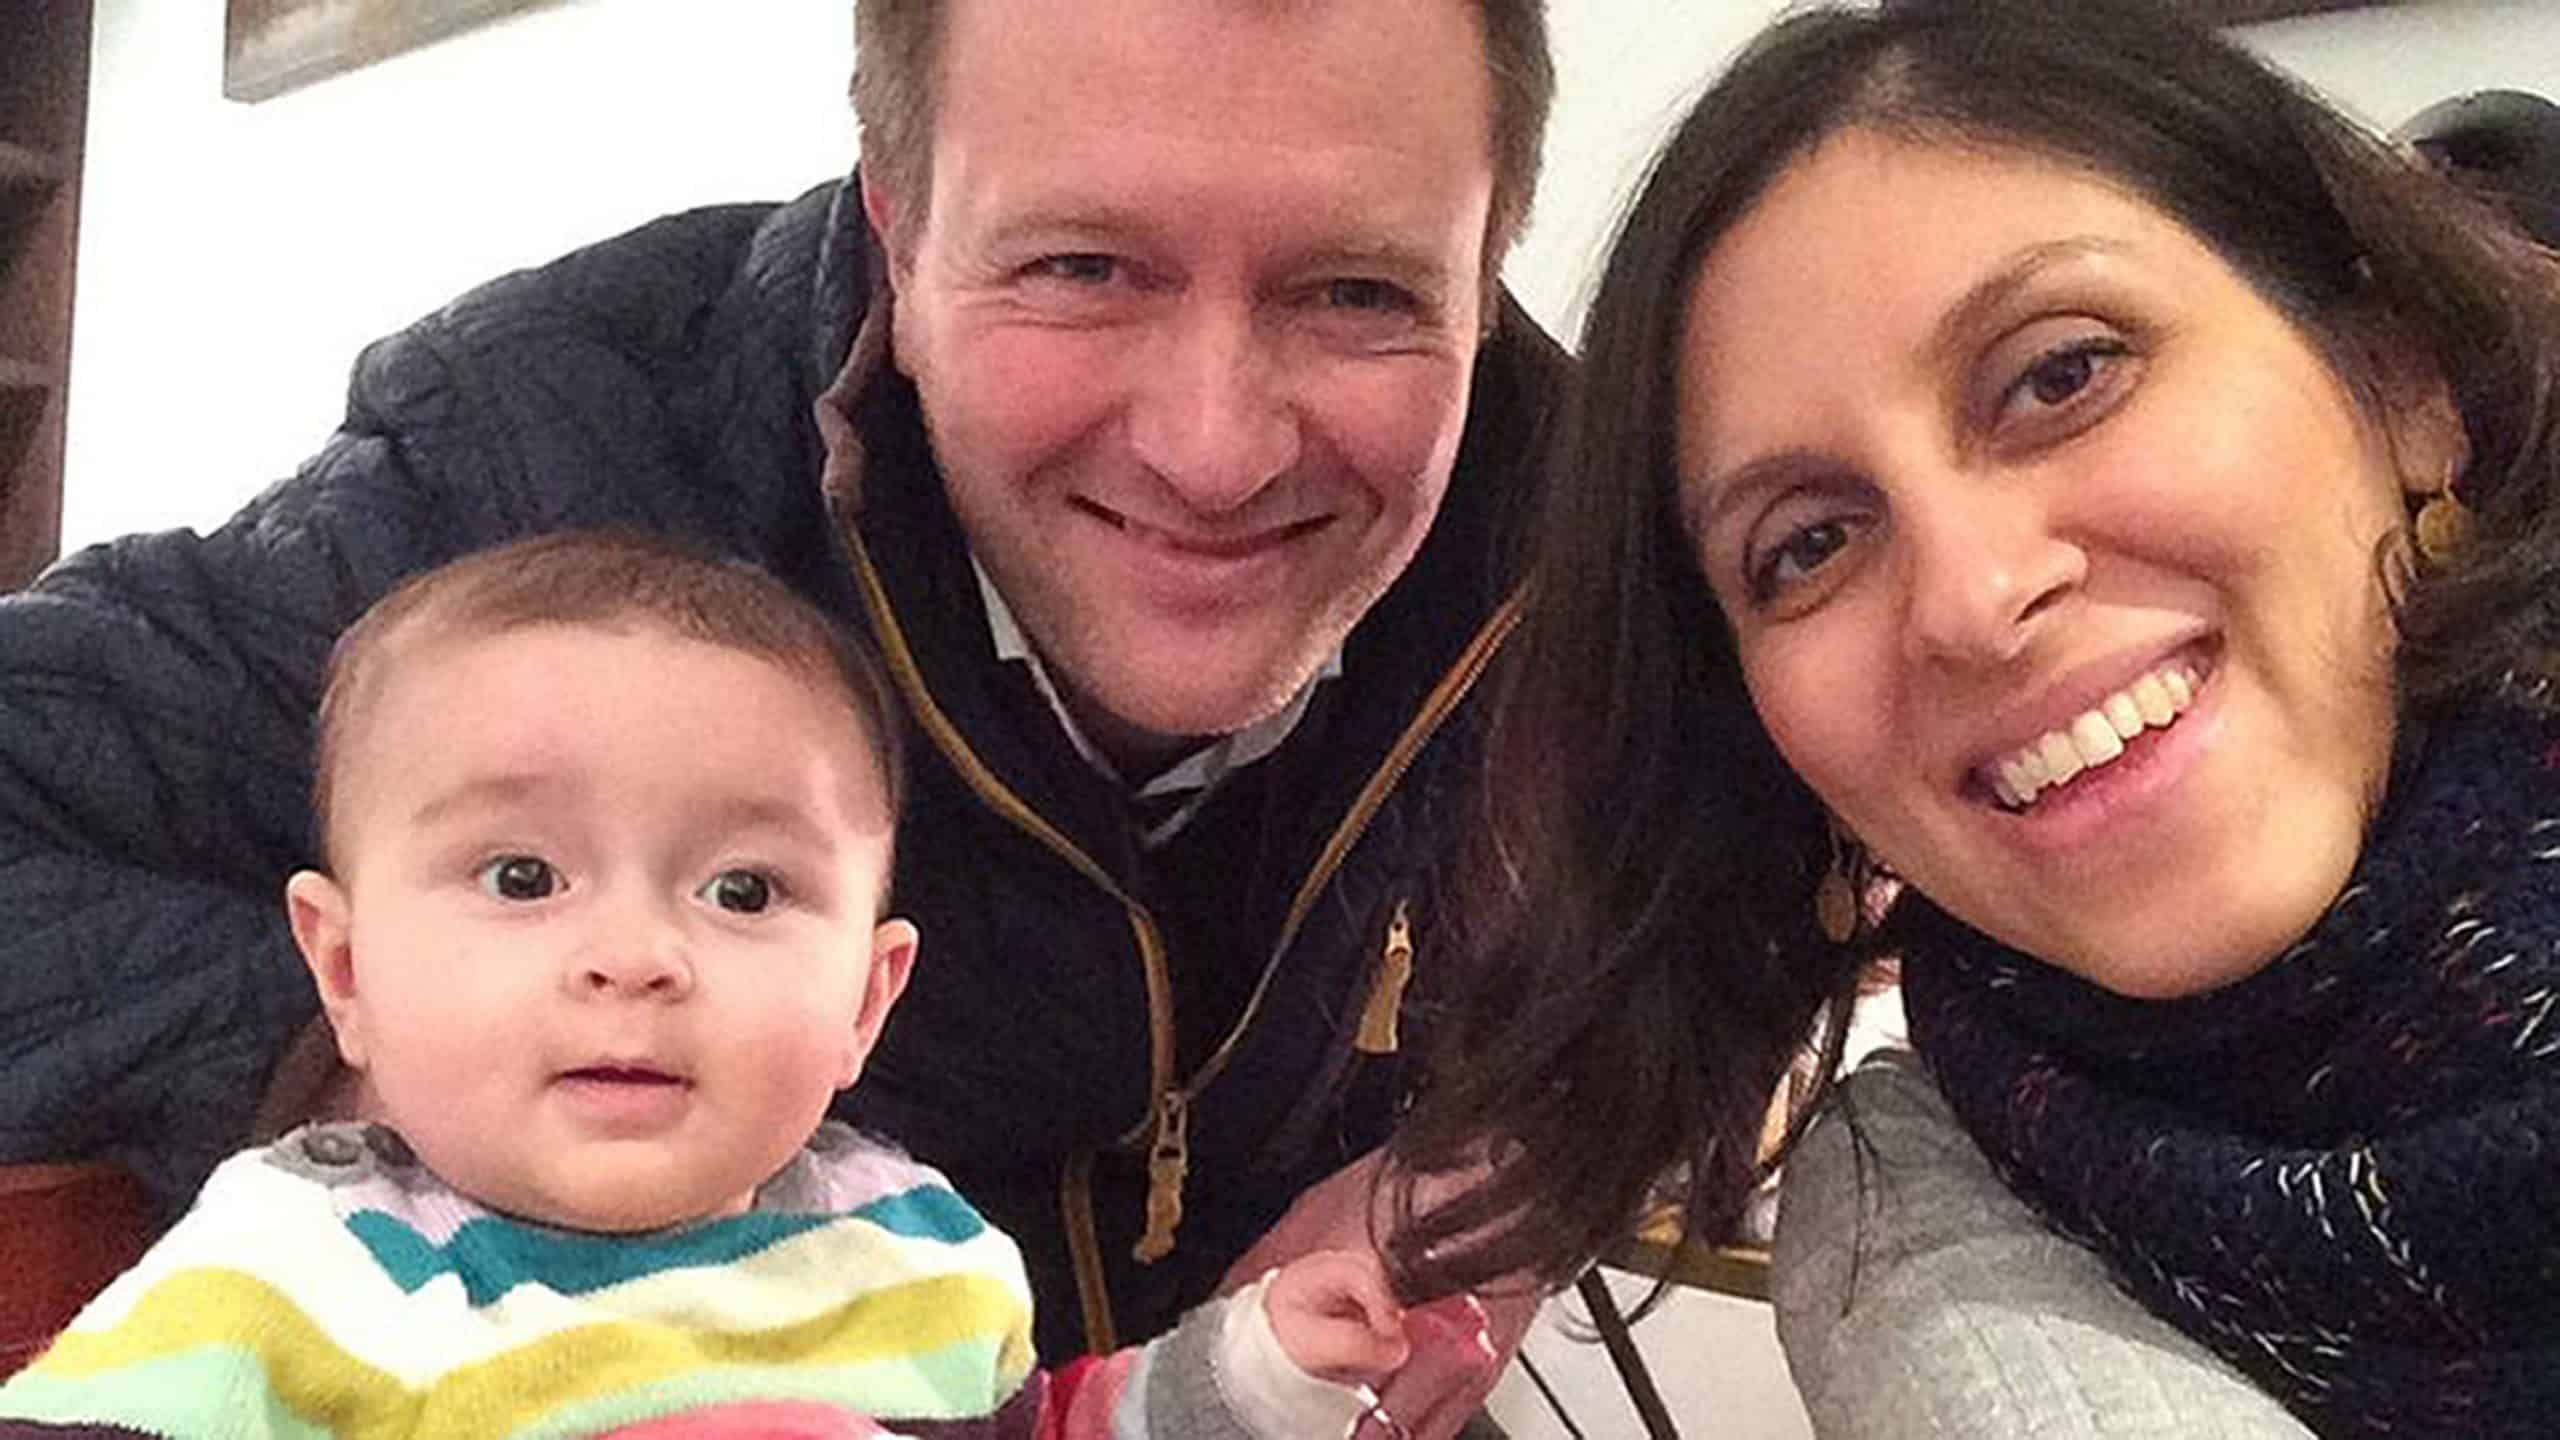 Nazanin Zaghari-Ratcliffe has contracted coronavirus in Iran prison, family says